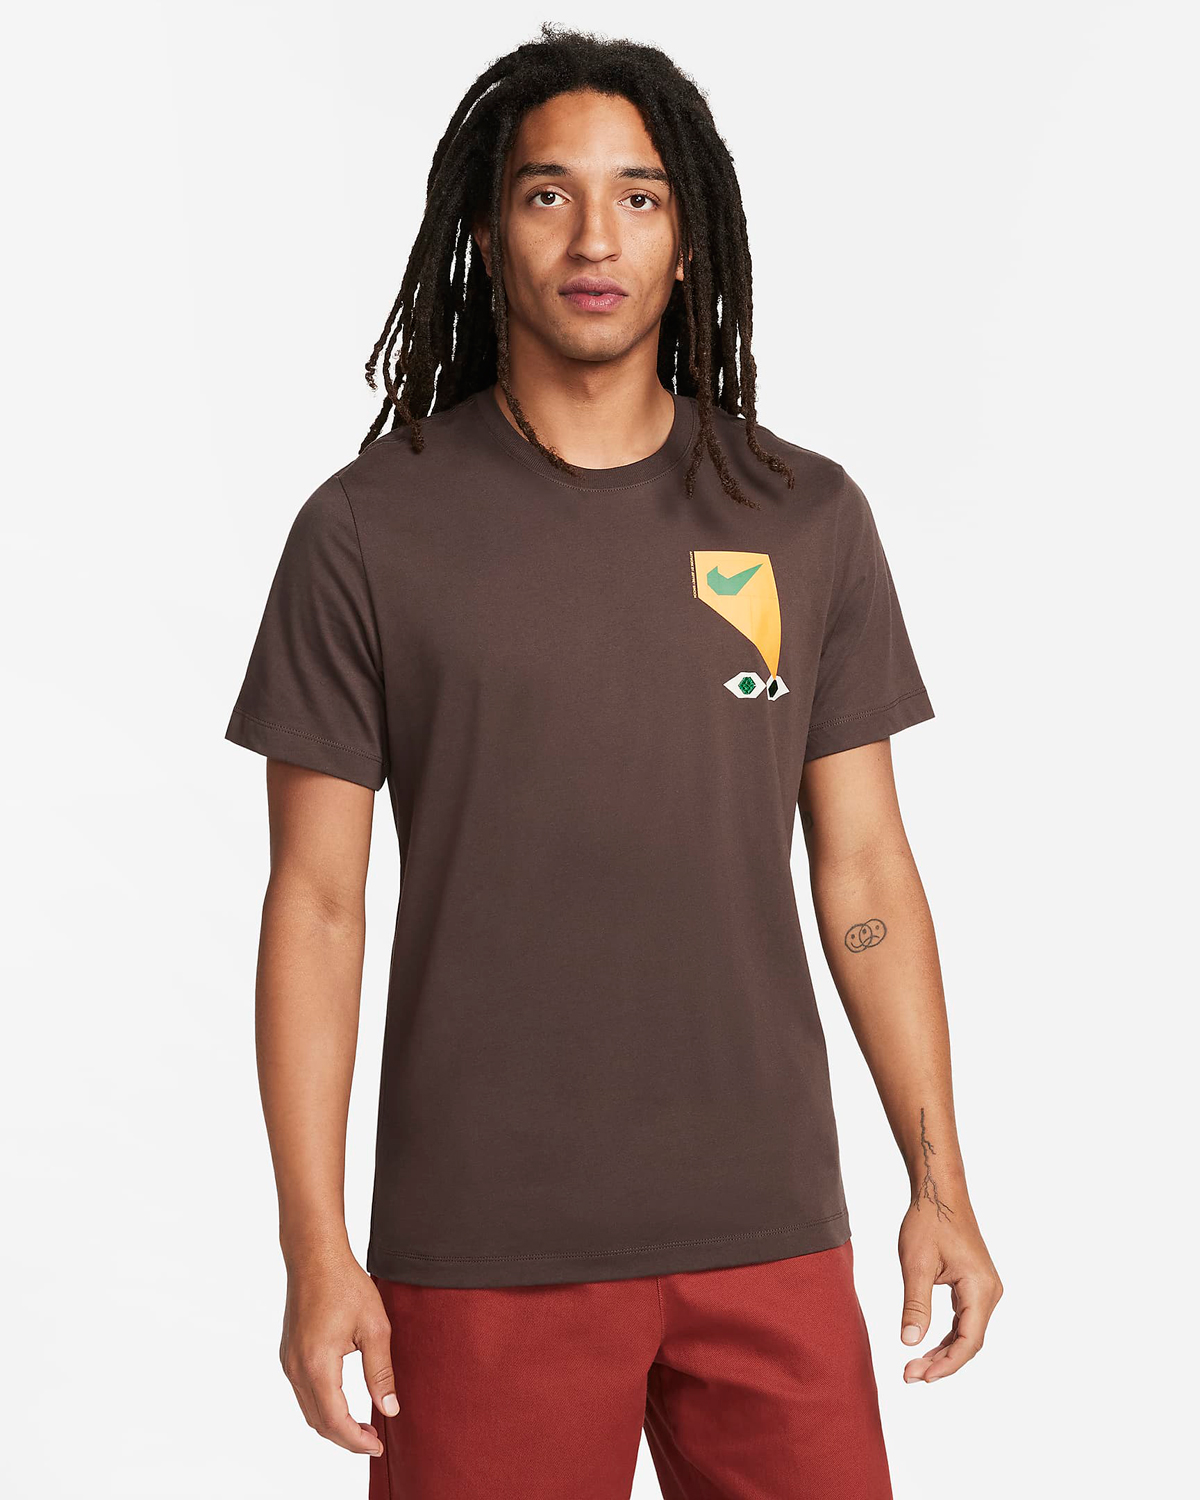 Nike-Sportswear-AF1-T-Shirt-Baroque-Brown-1